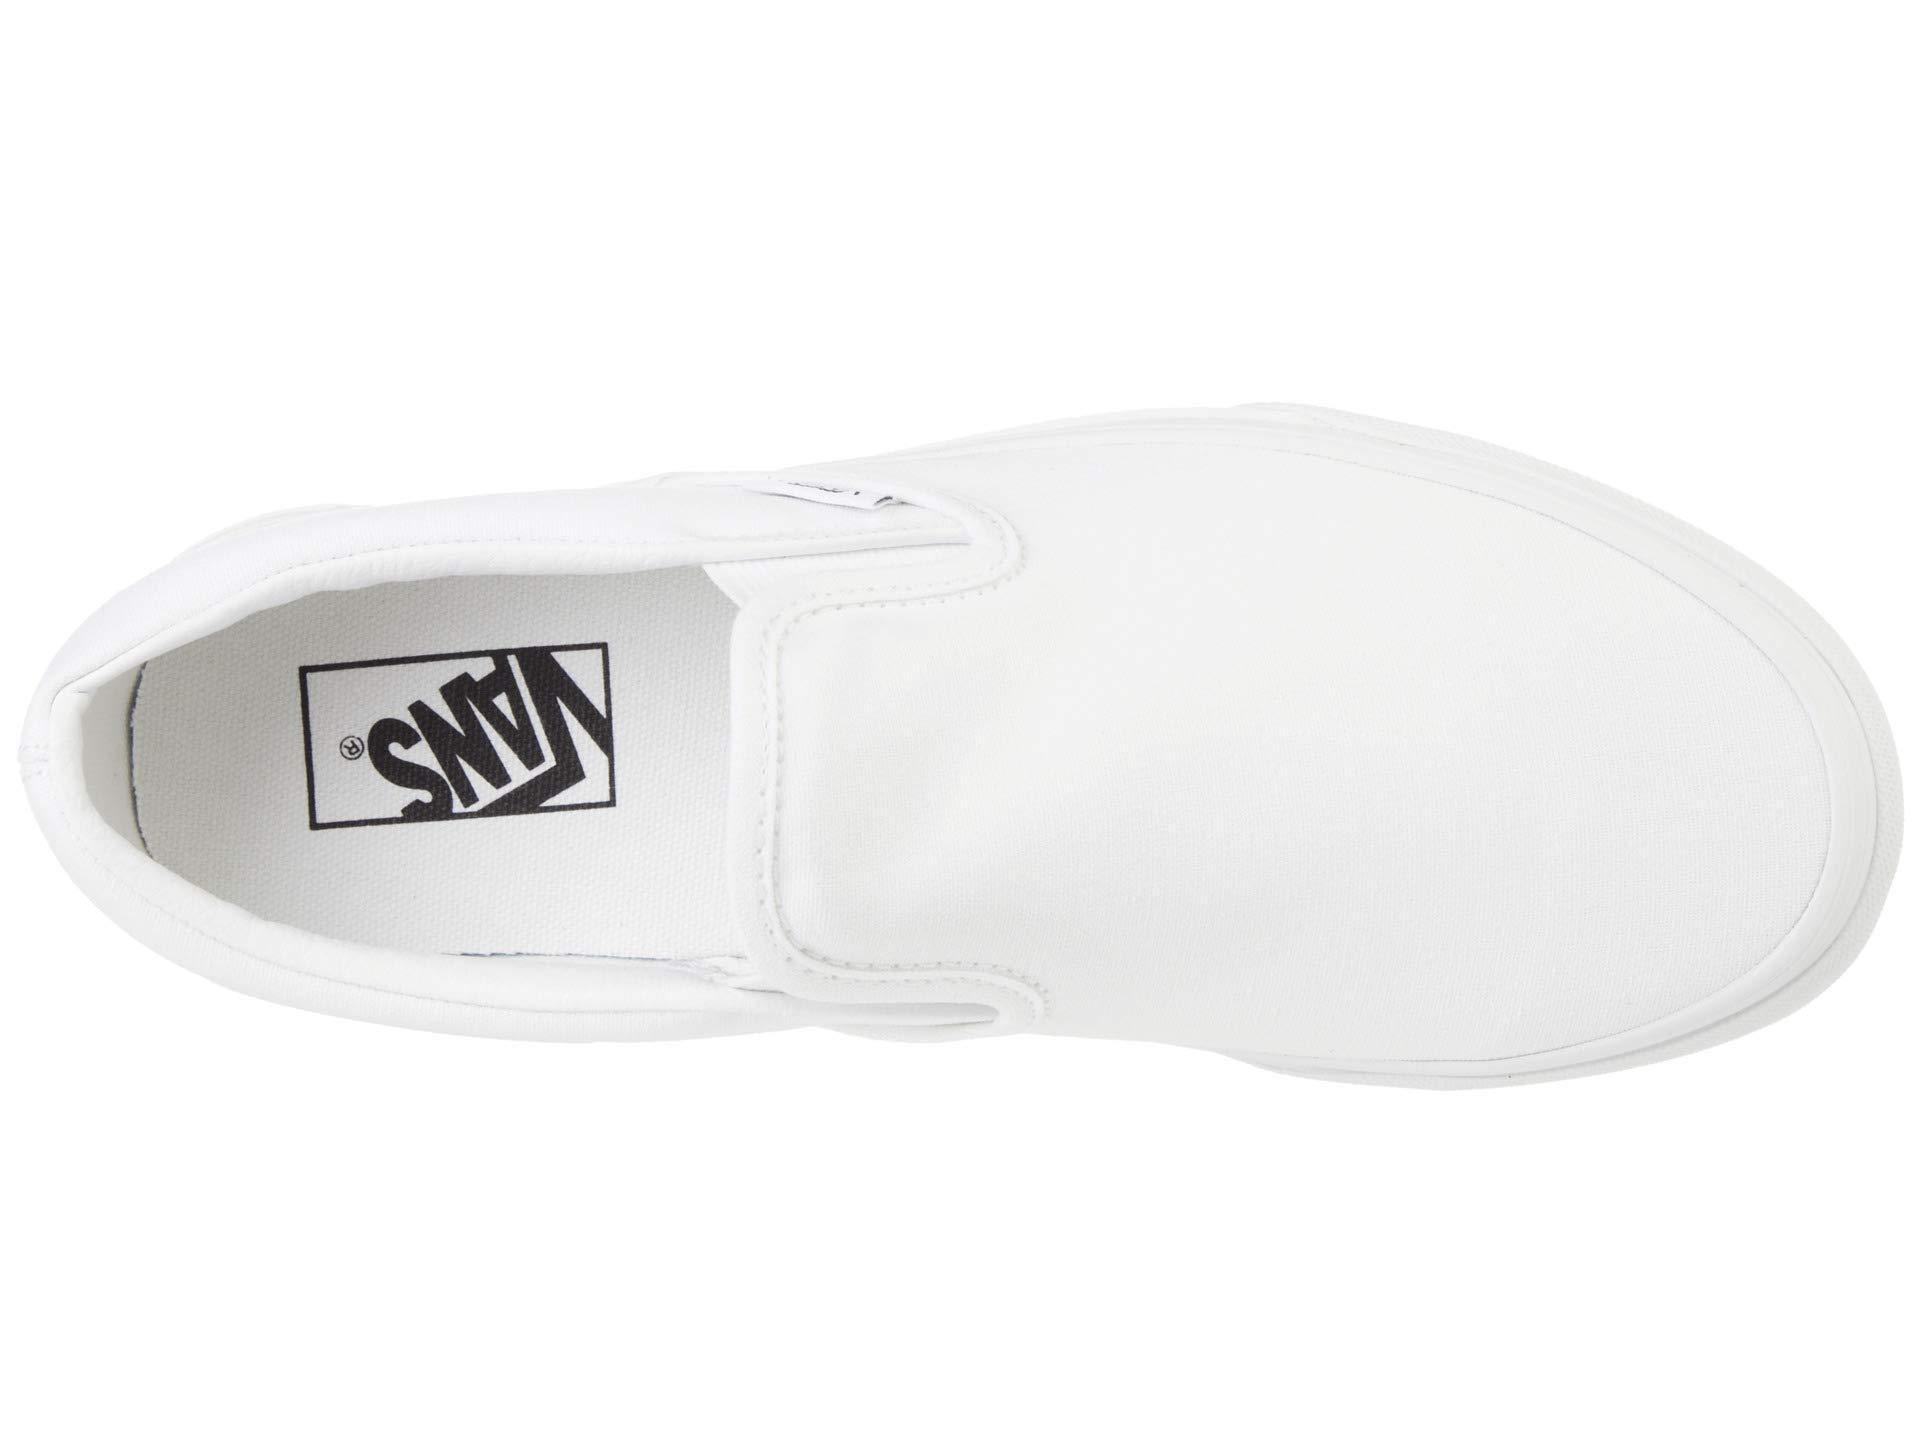 Vans Single Shoe - Classic Slip-on Core Classics in White | Lyst